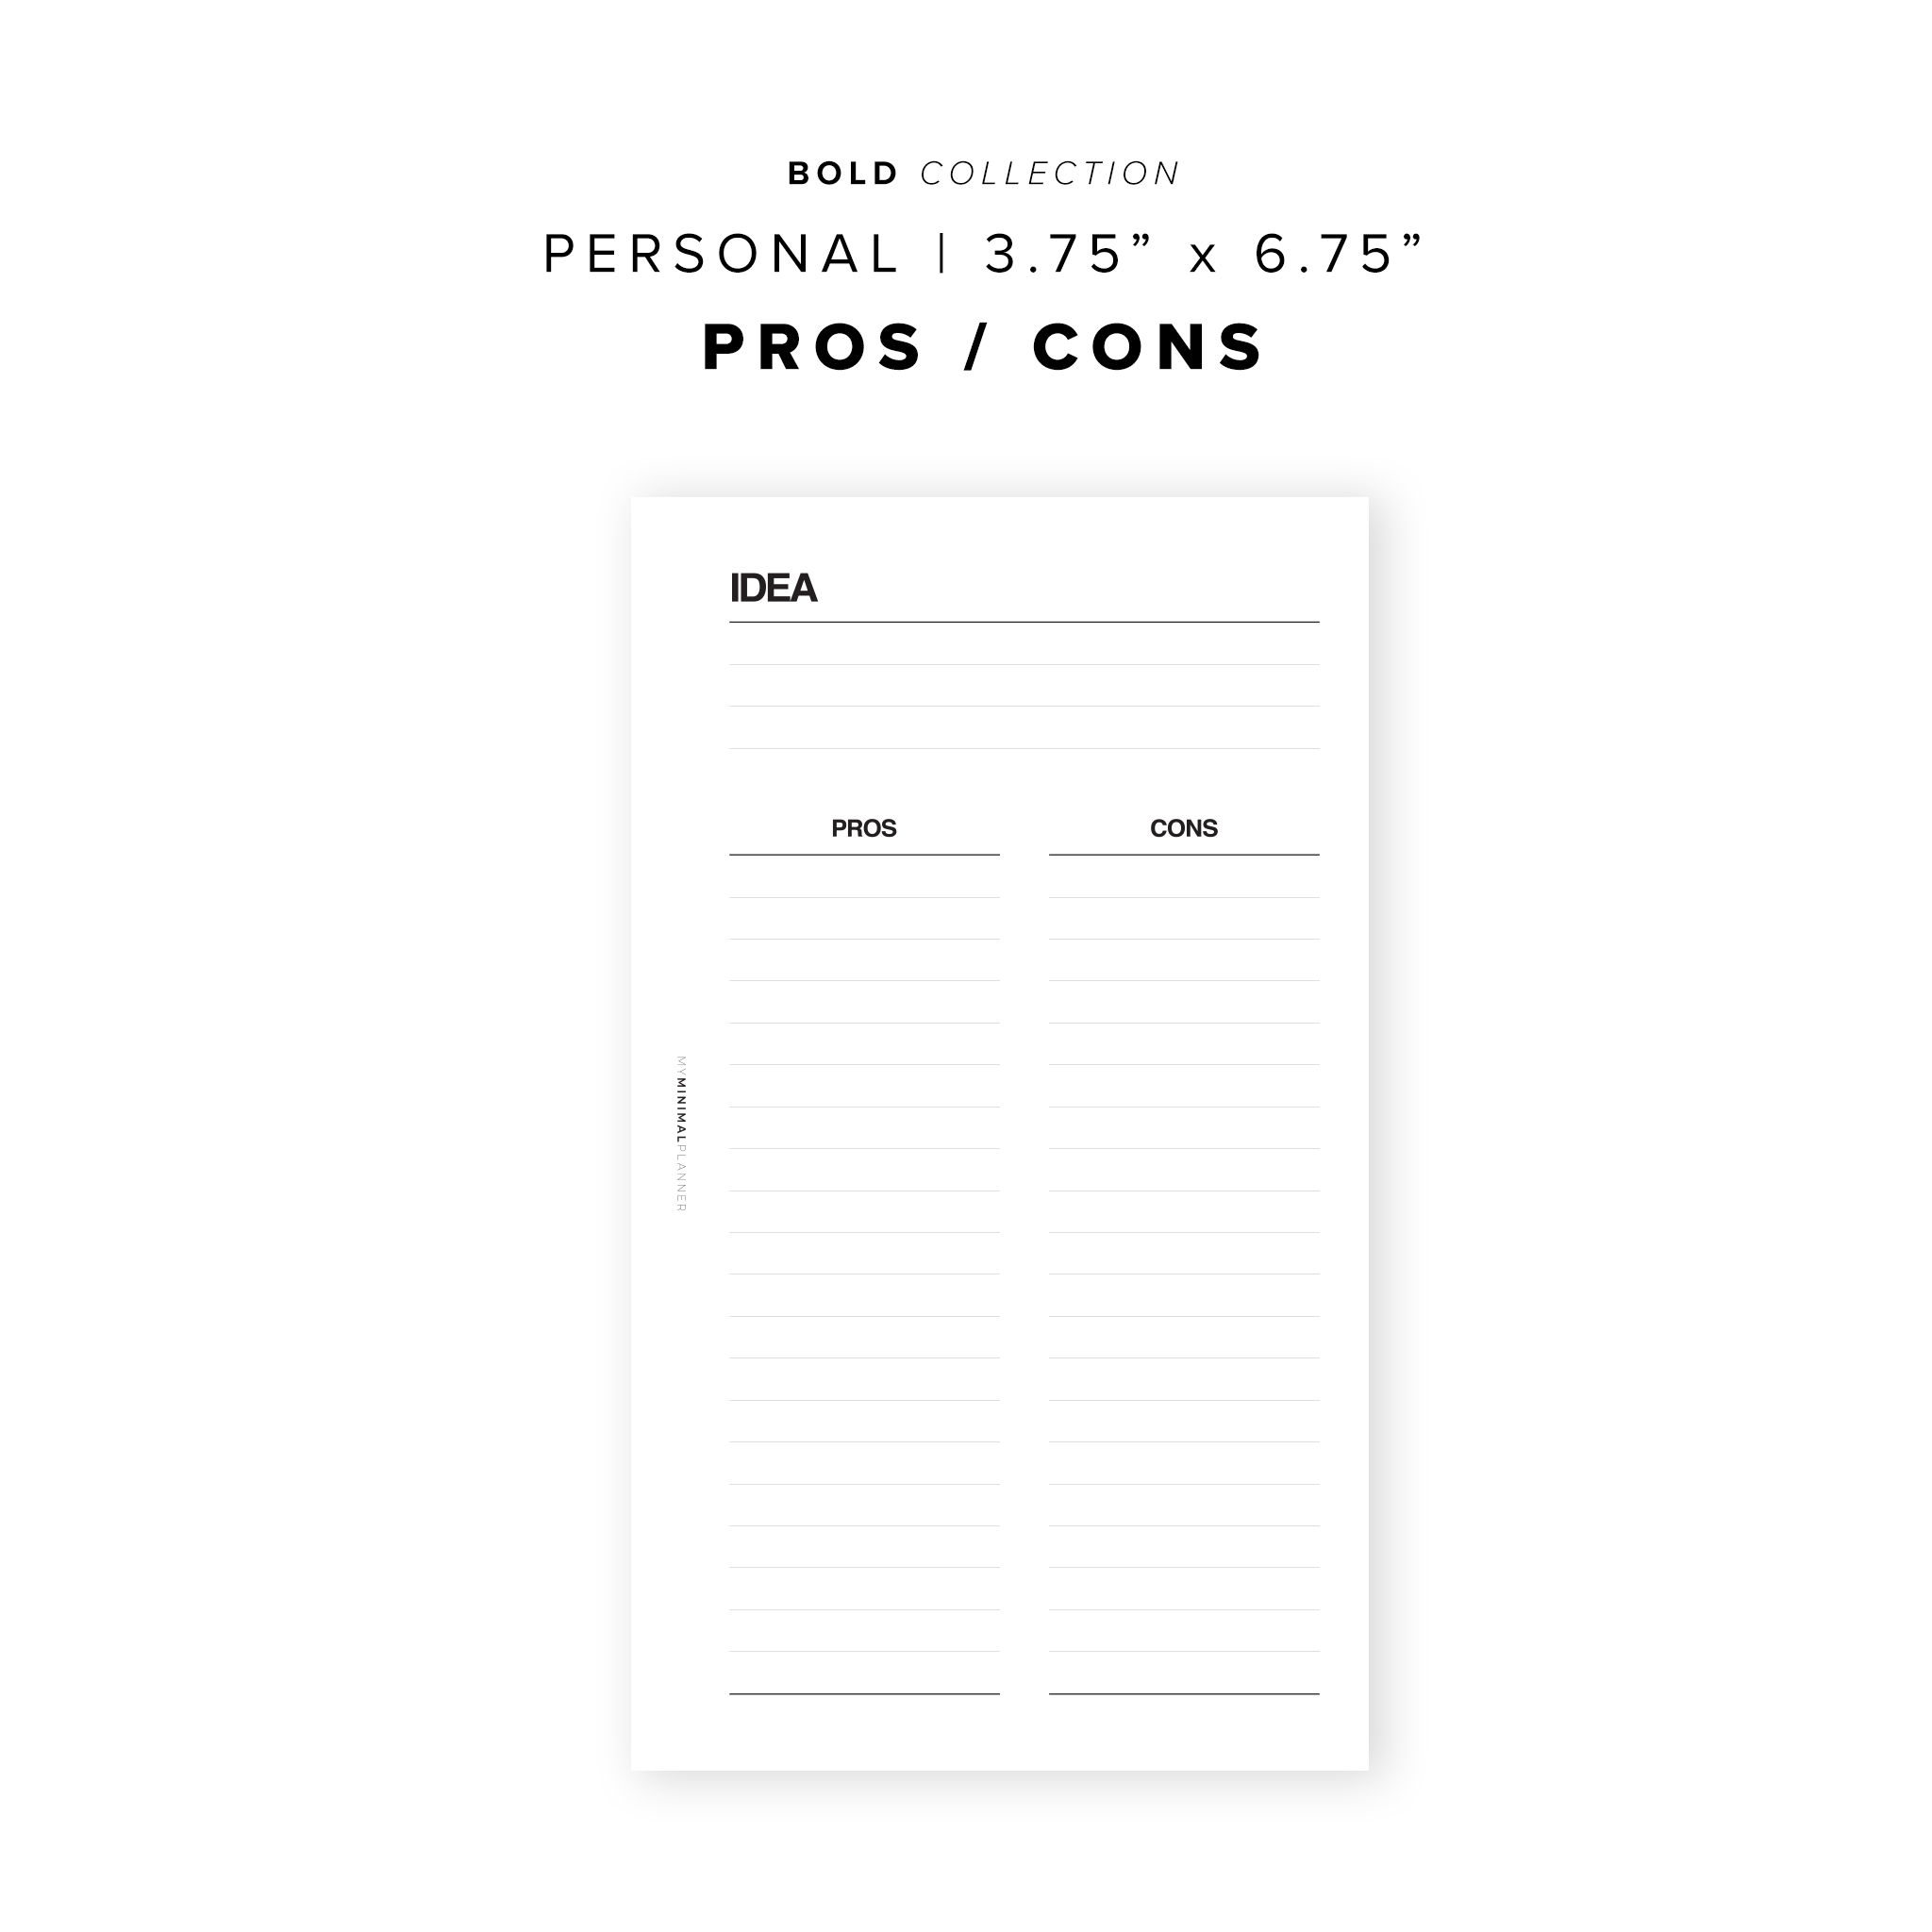 PR101 - Pros / Cons - Printable Insert